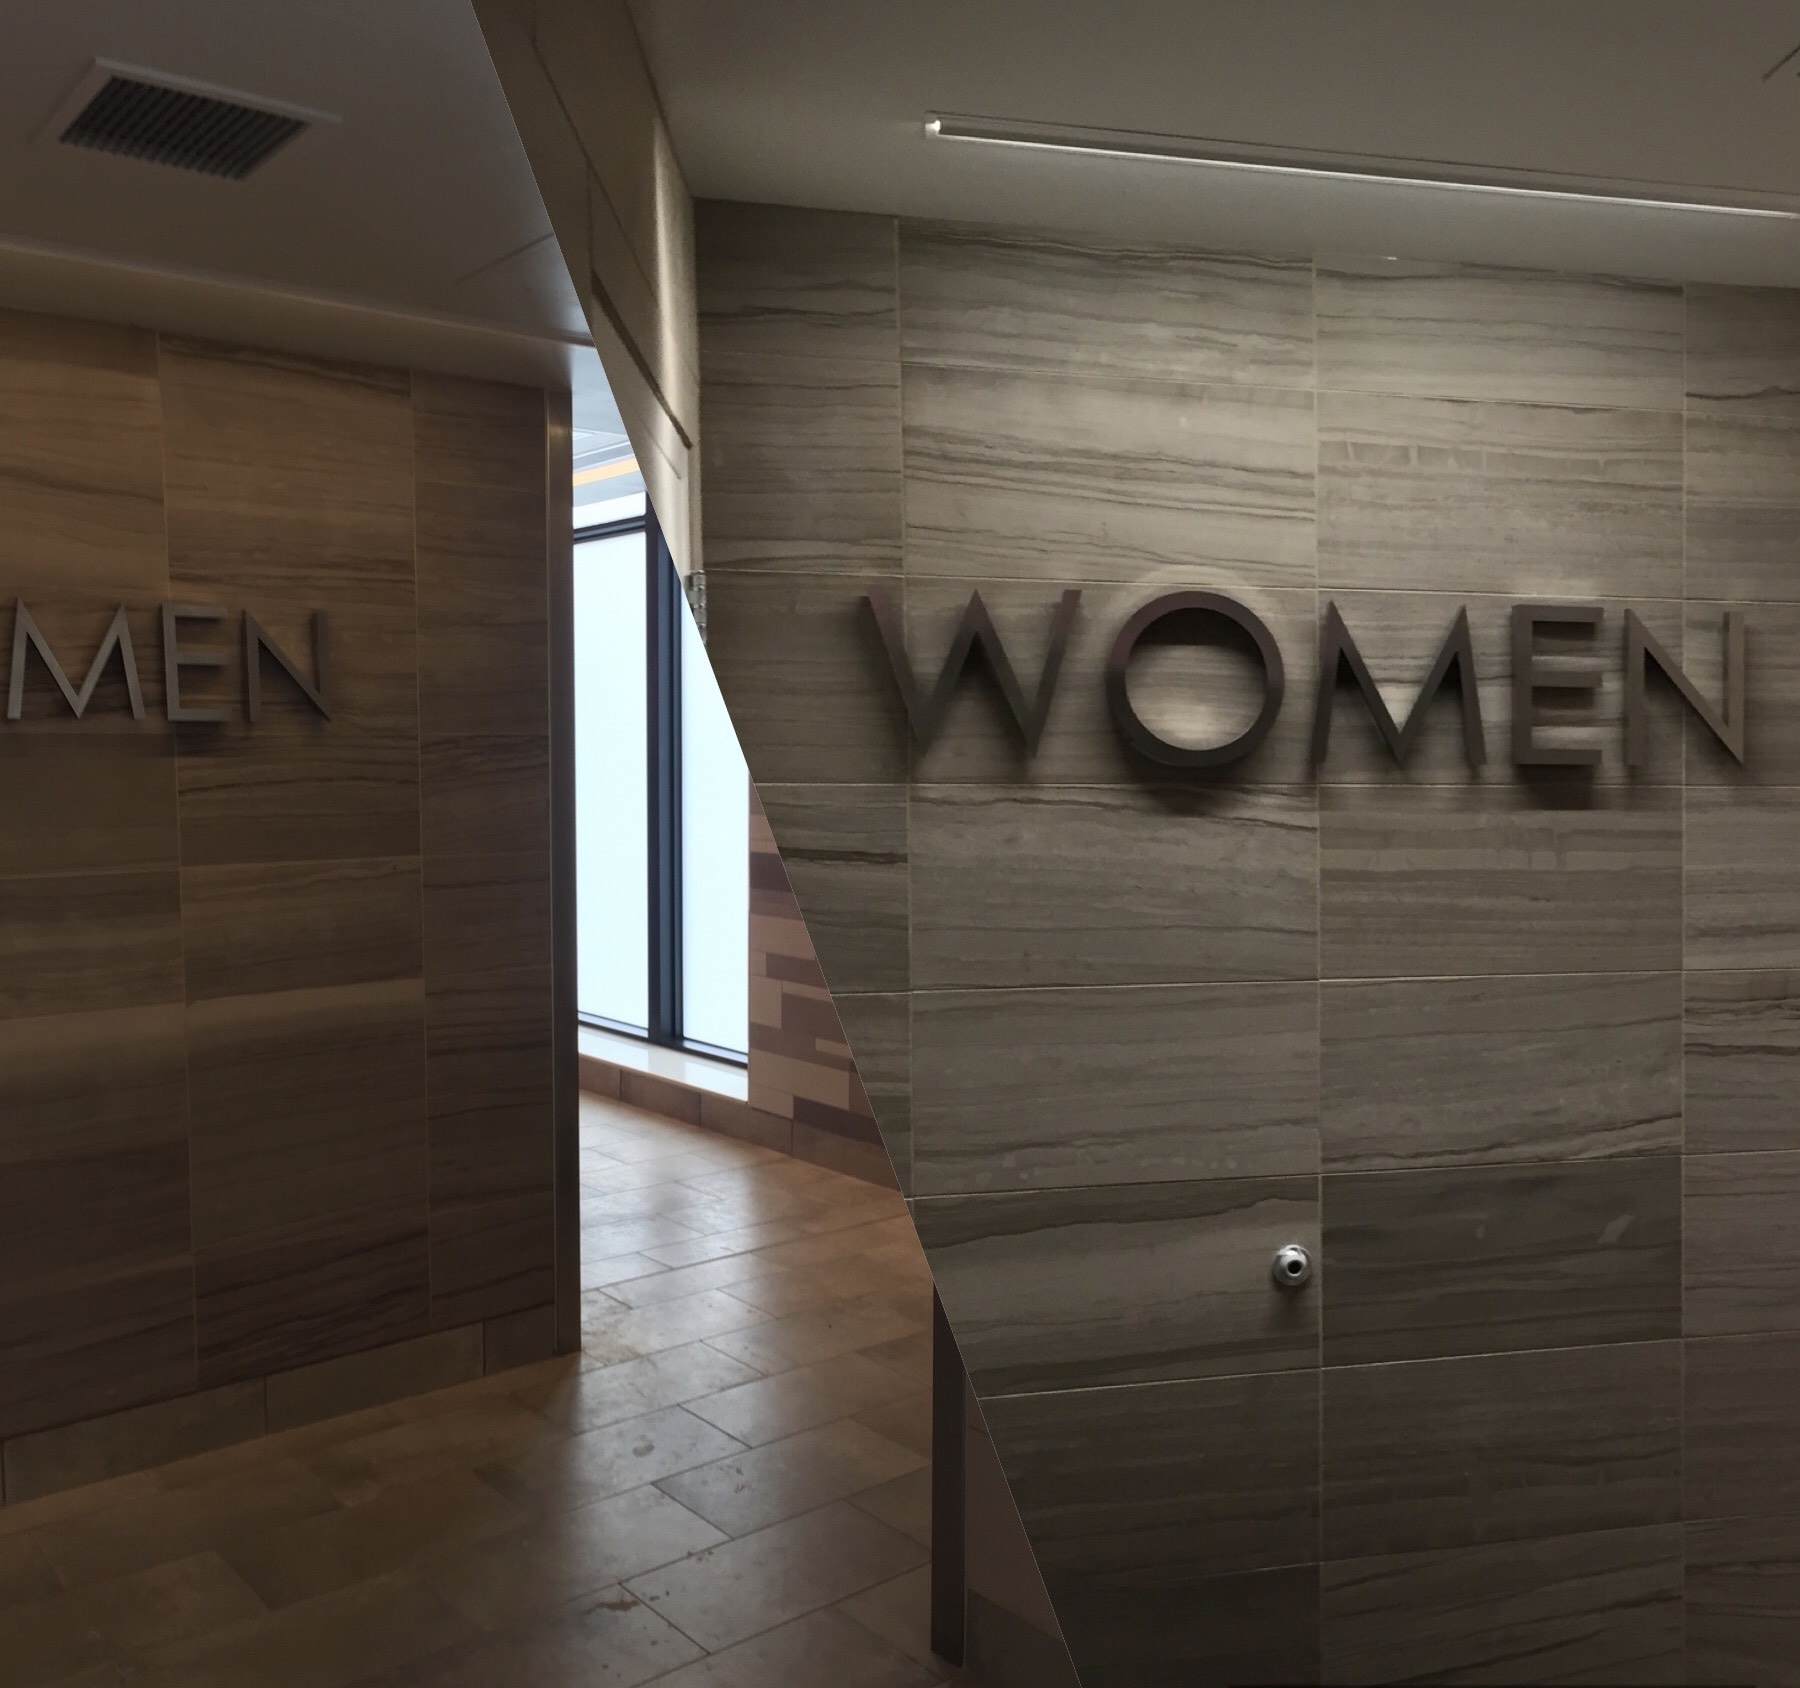 Restroom entrance (Men/Women)